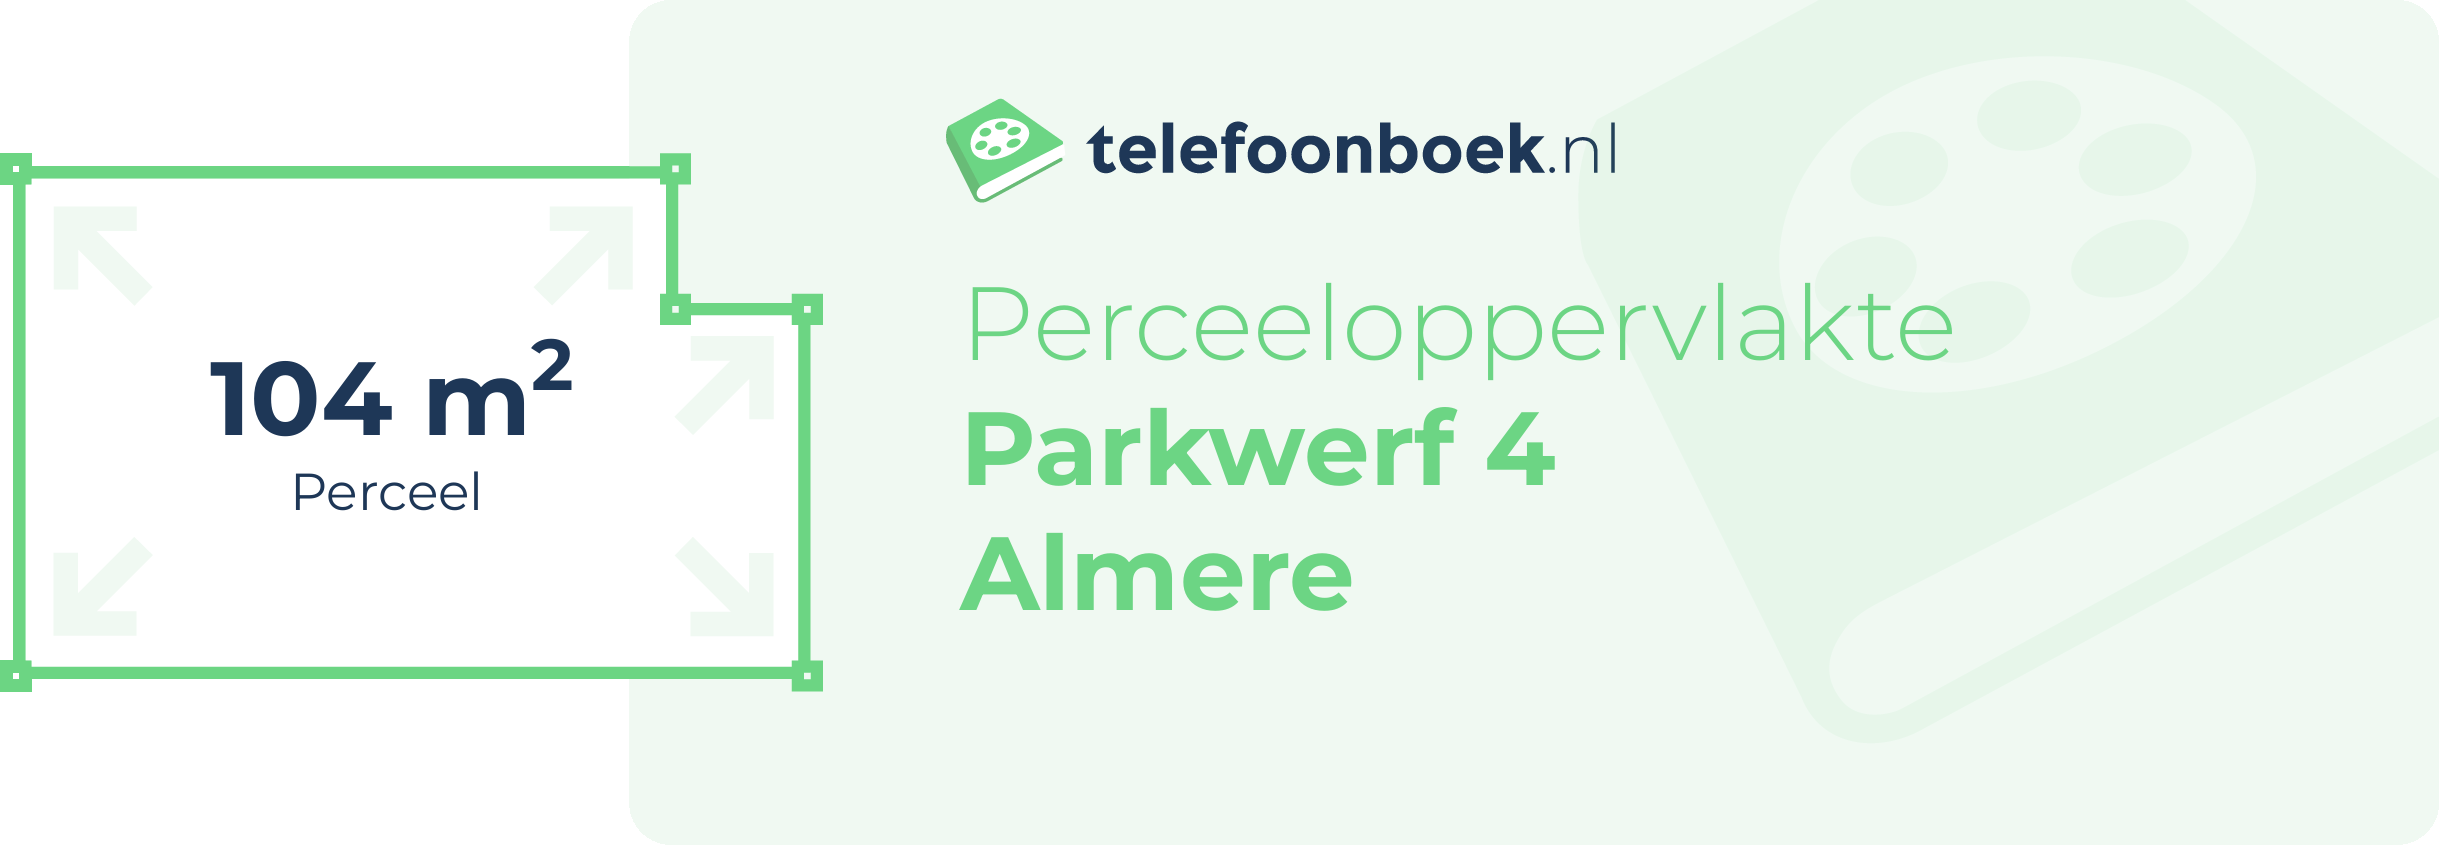 Perceeloppervlakte Parkwerf 4 Almere